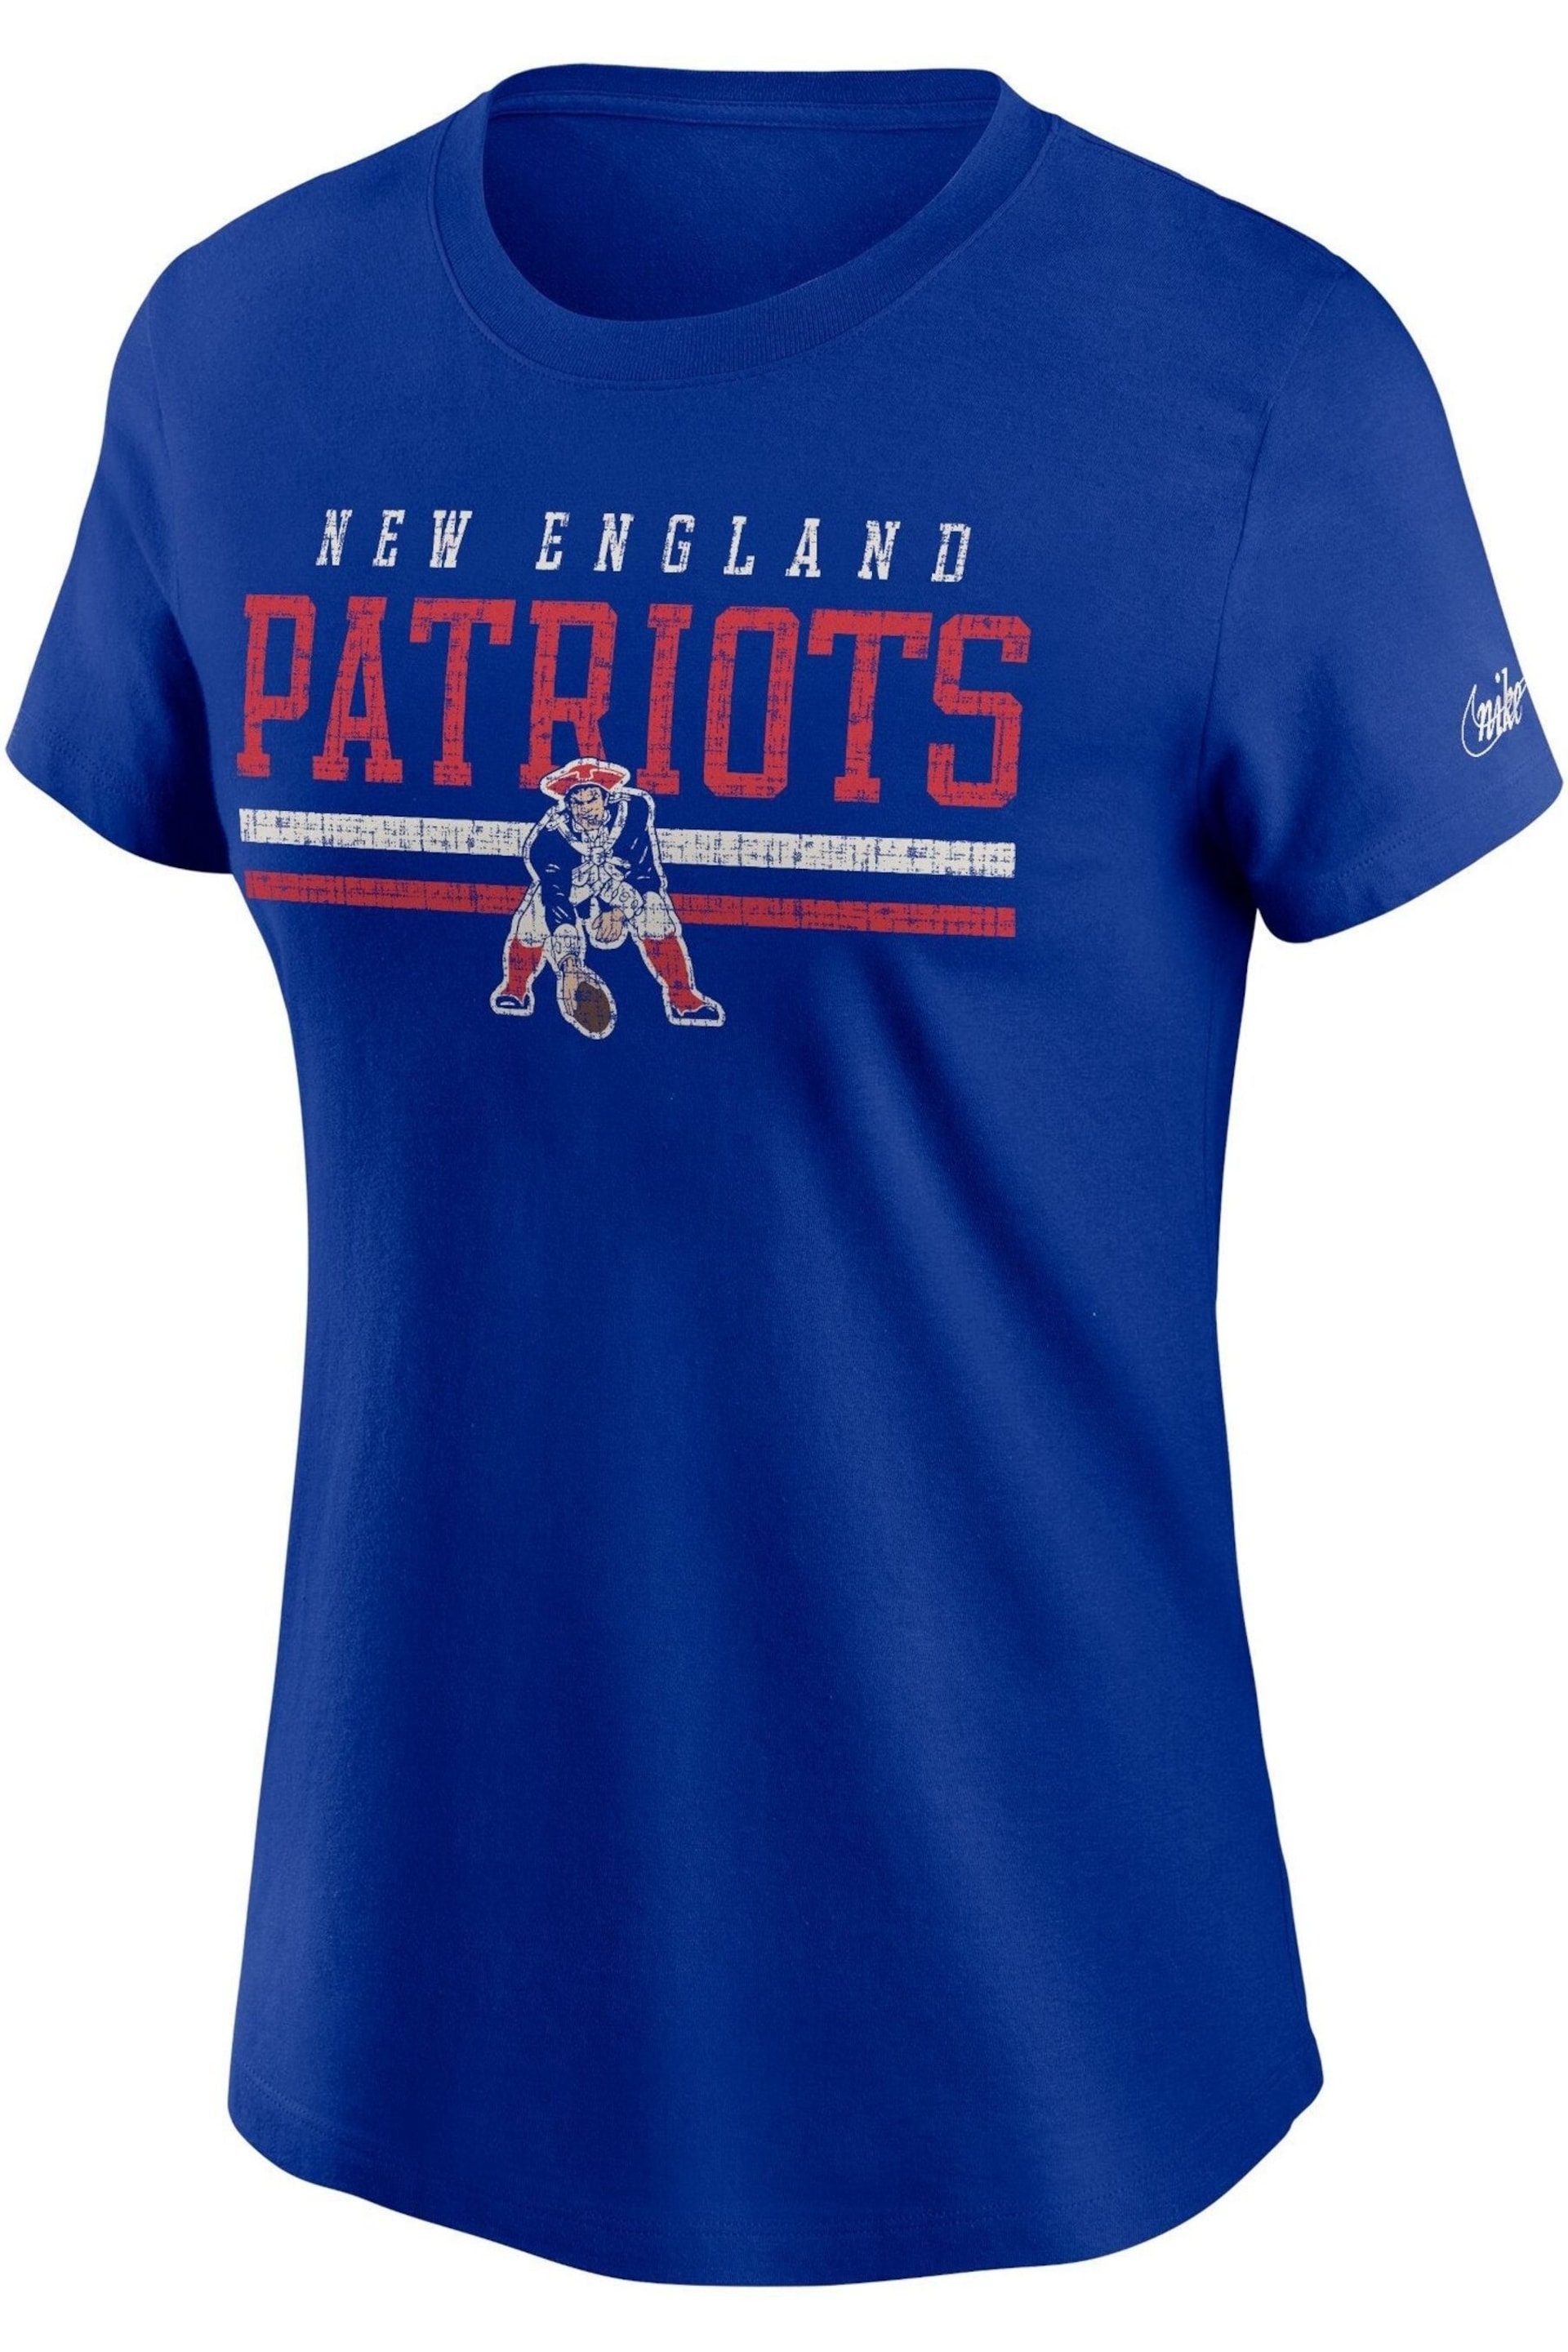 Nike Blue NFL Fanatics Womens New England Patriots Short Sleeve Historic T-Shirt Womens - Image 1 of 3